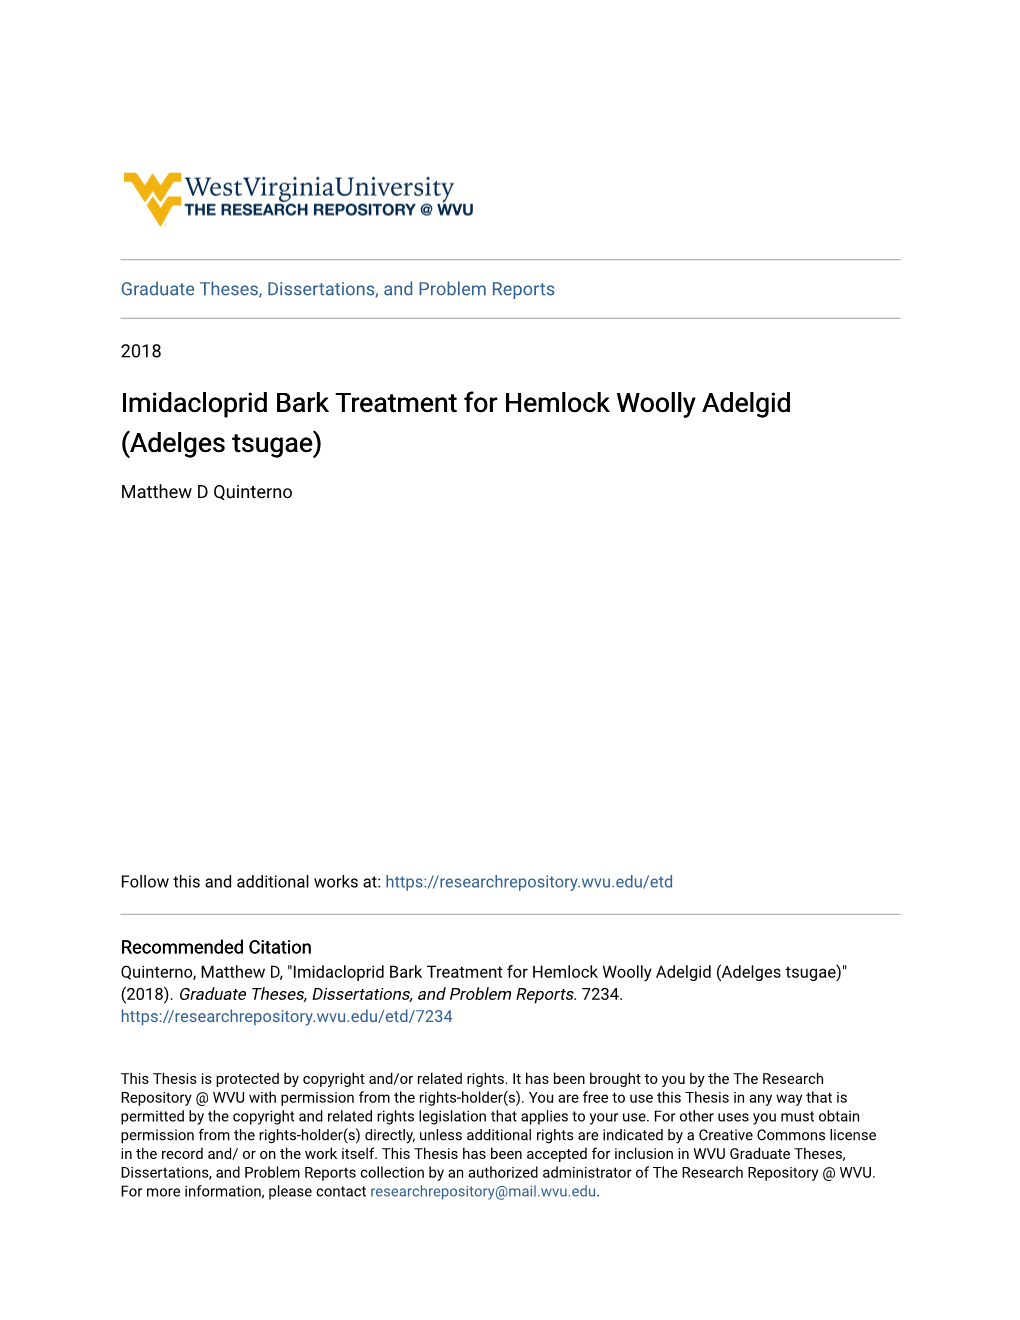 Imidacloprid Bark Treatment for Hemlock Woolly Adelgid (Adelges Tsugae)